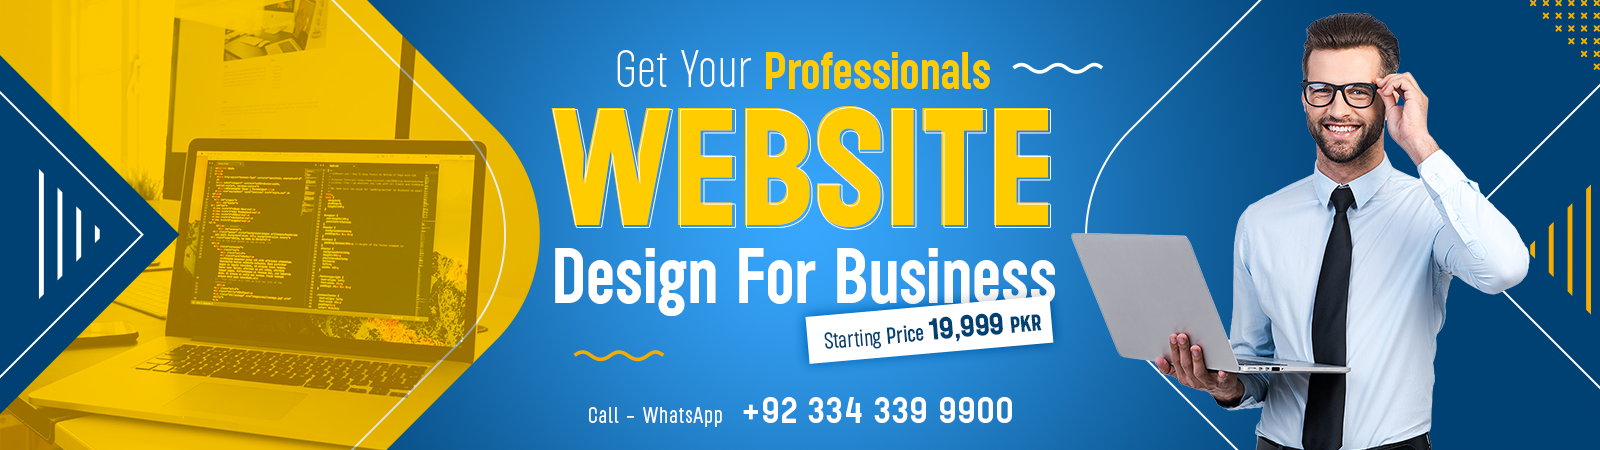 Start Your Website Designing at Lowest Price In Karachi Pakistan